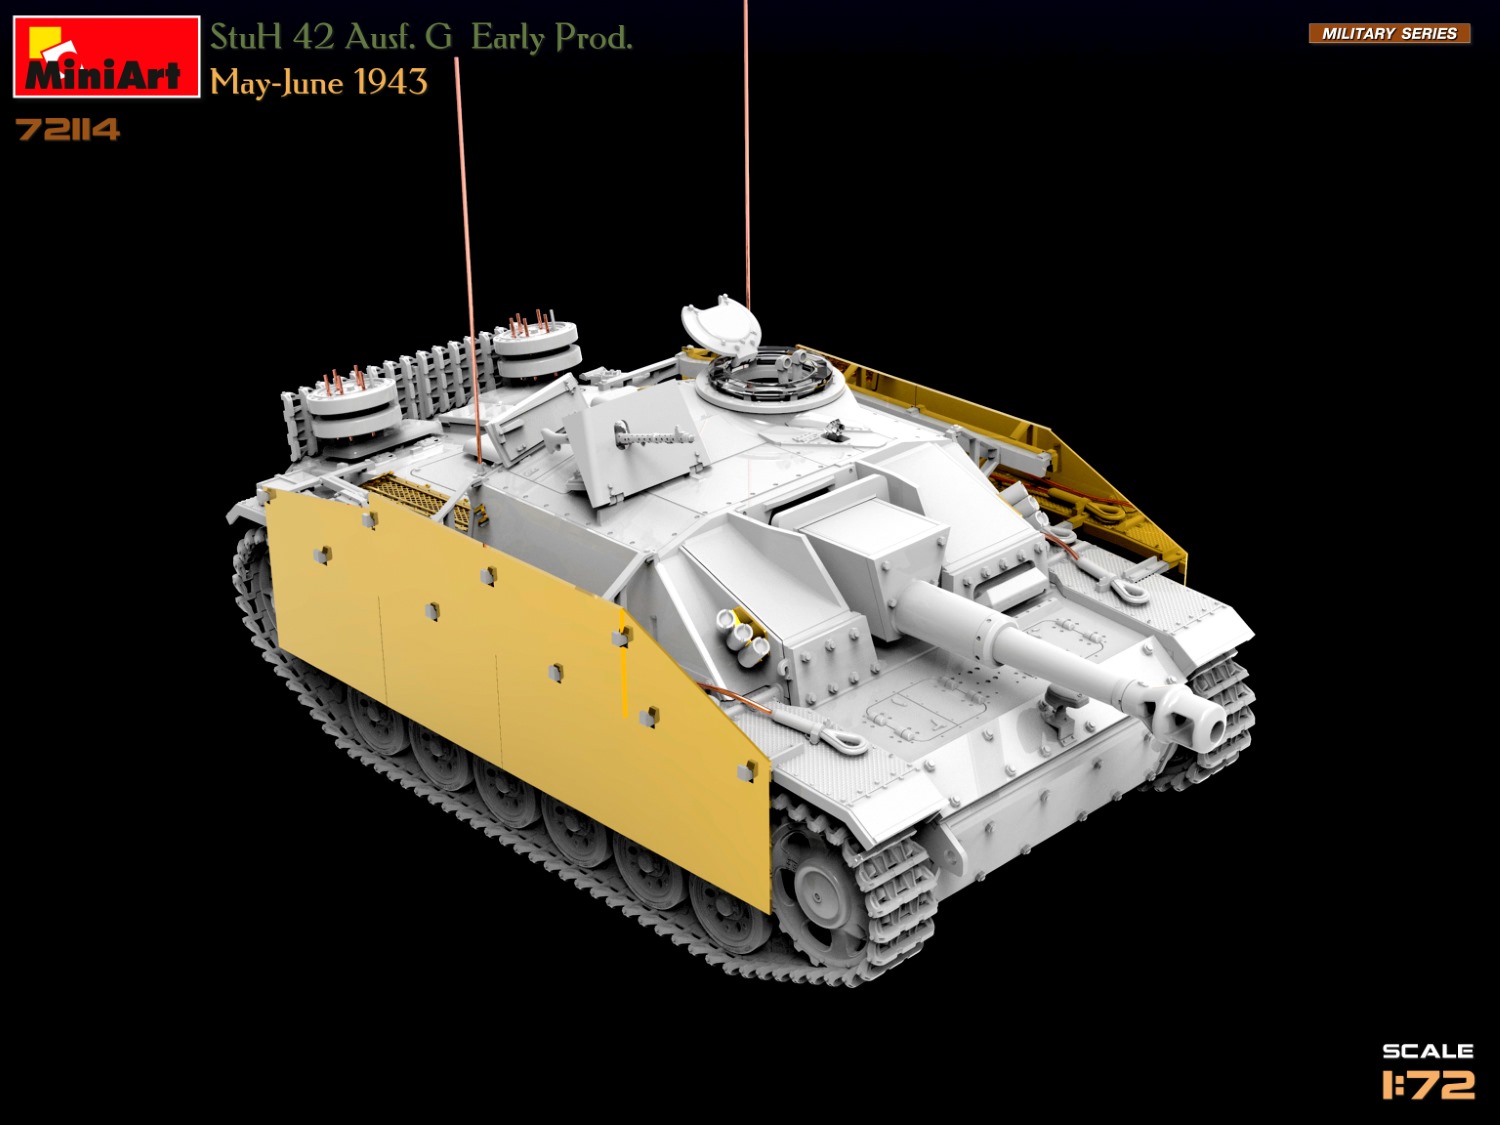 Miniart 1/72 StuH 42 Ausf. G Early Prod # 72114